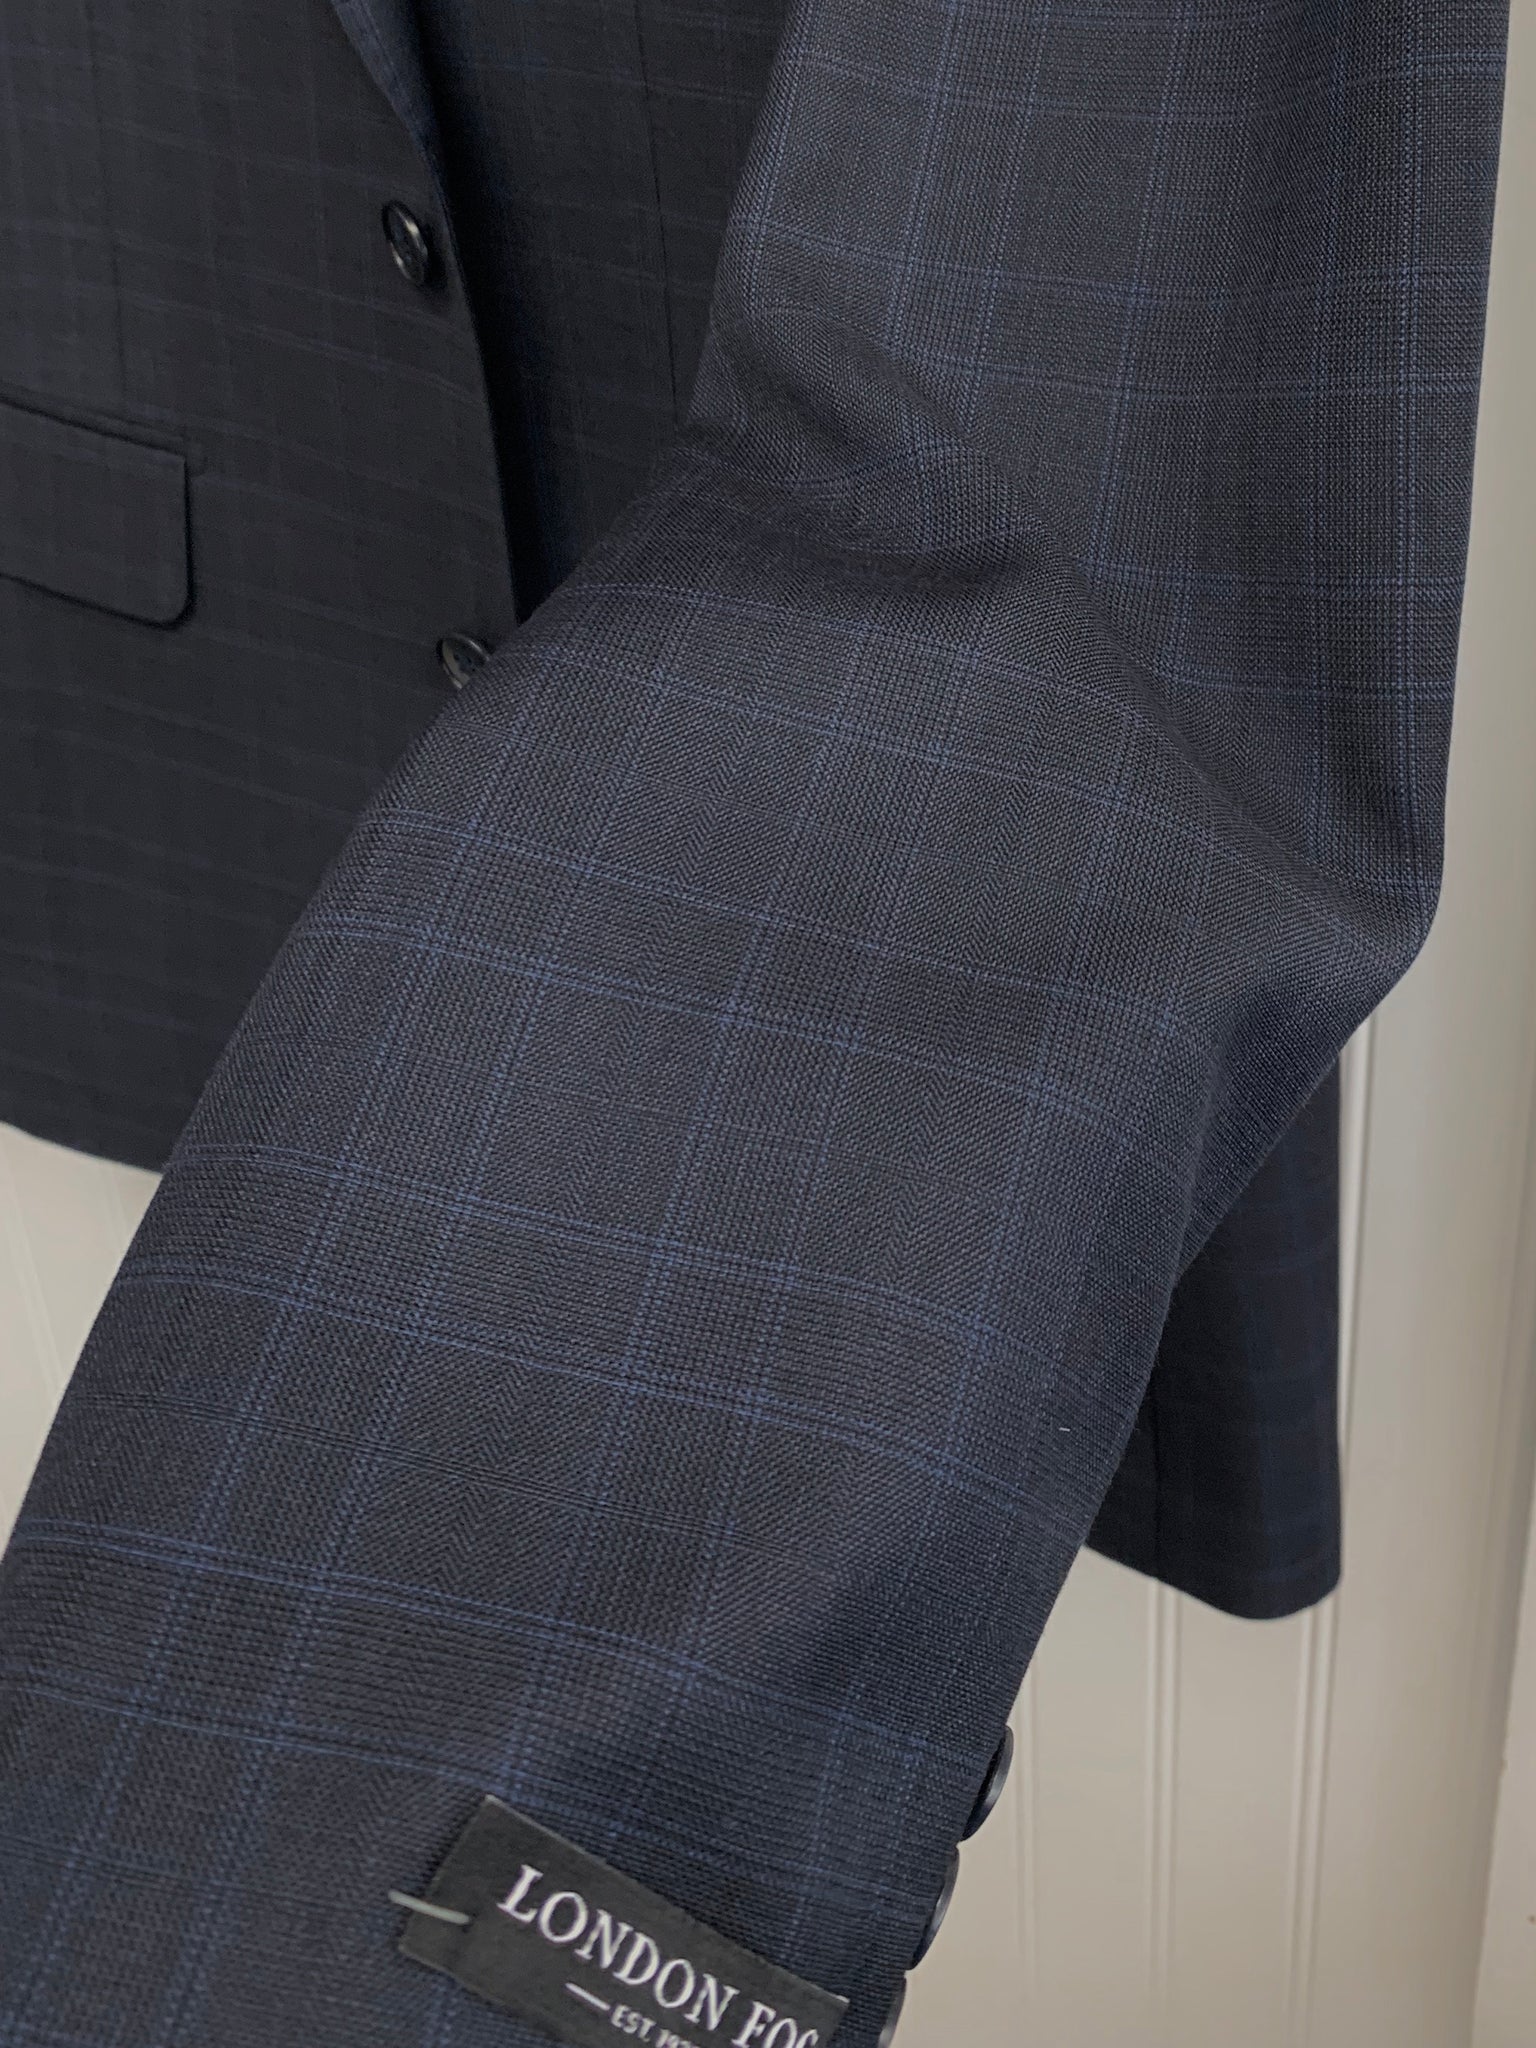 London Fog Wool Suit - L10003-1 (Gray w/ Lt. Blue Plaid)